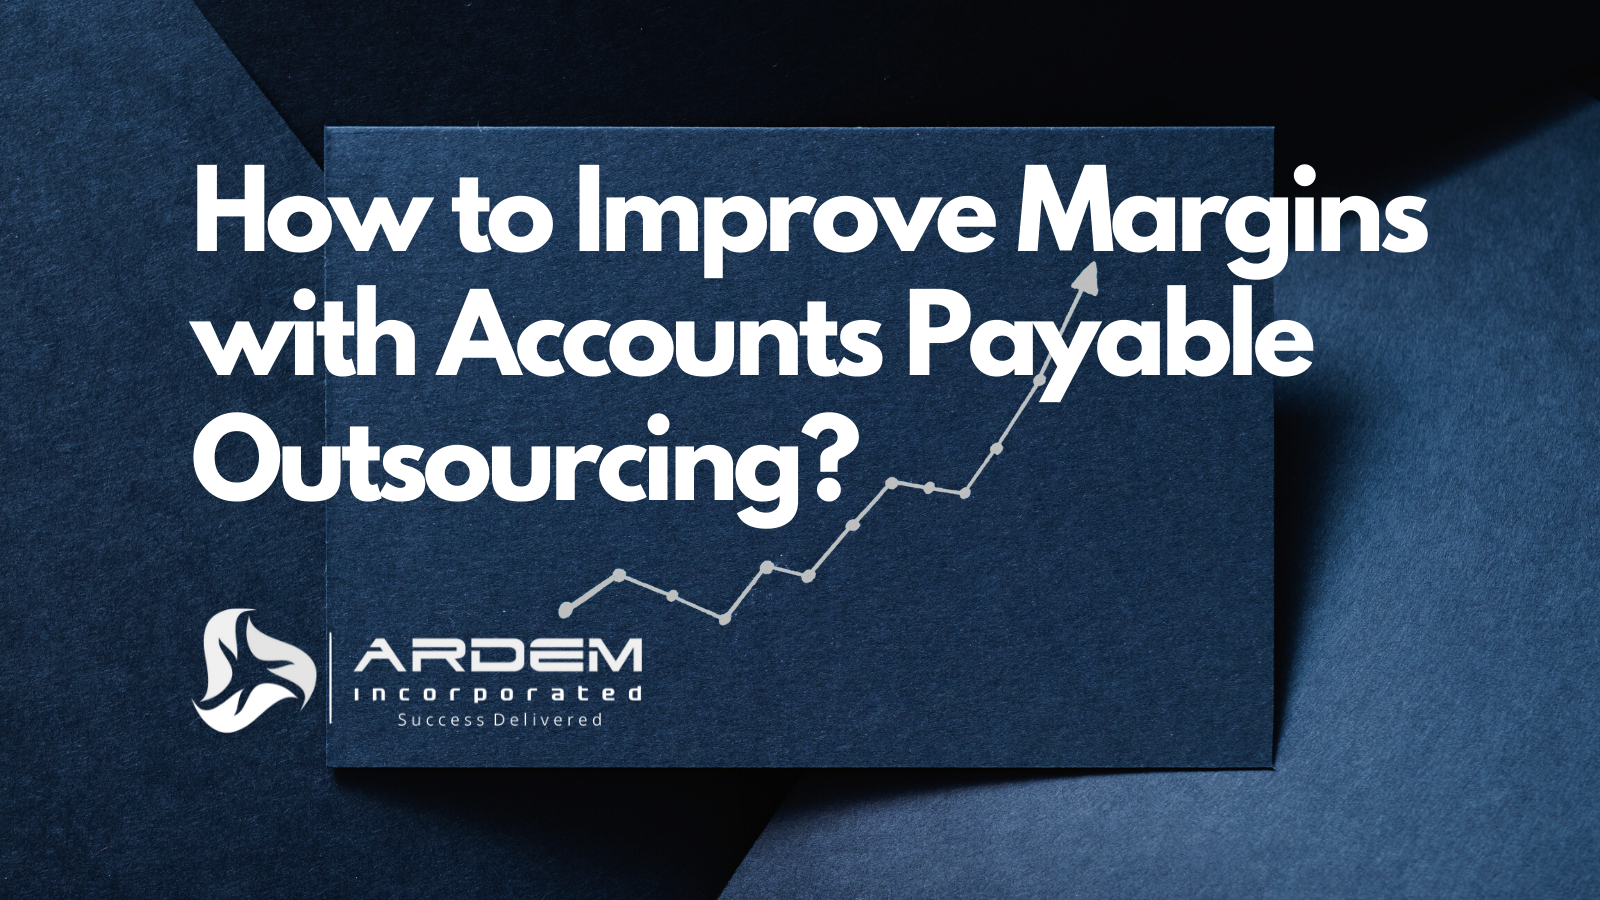 accounts payable outsourcing accounting blog